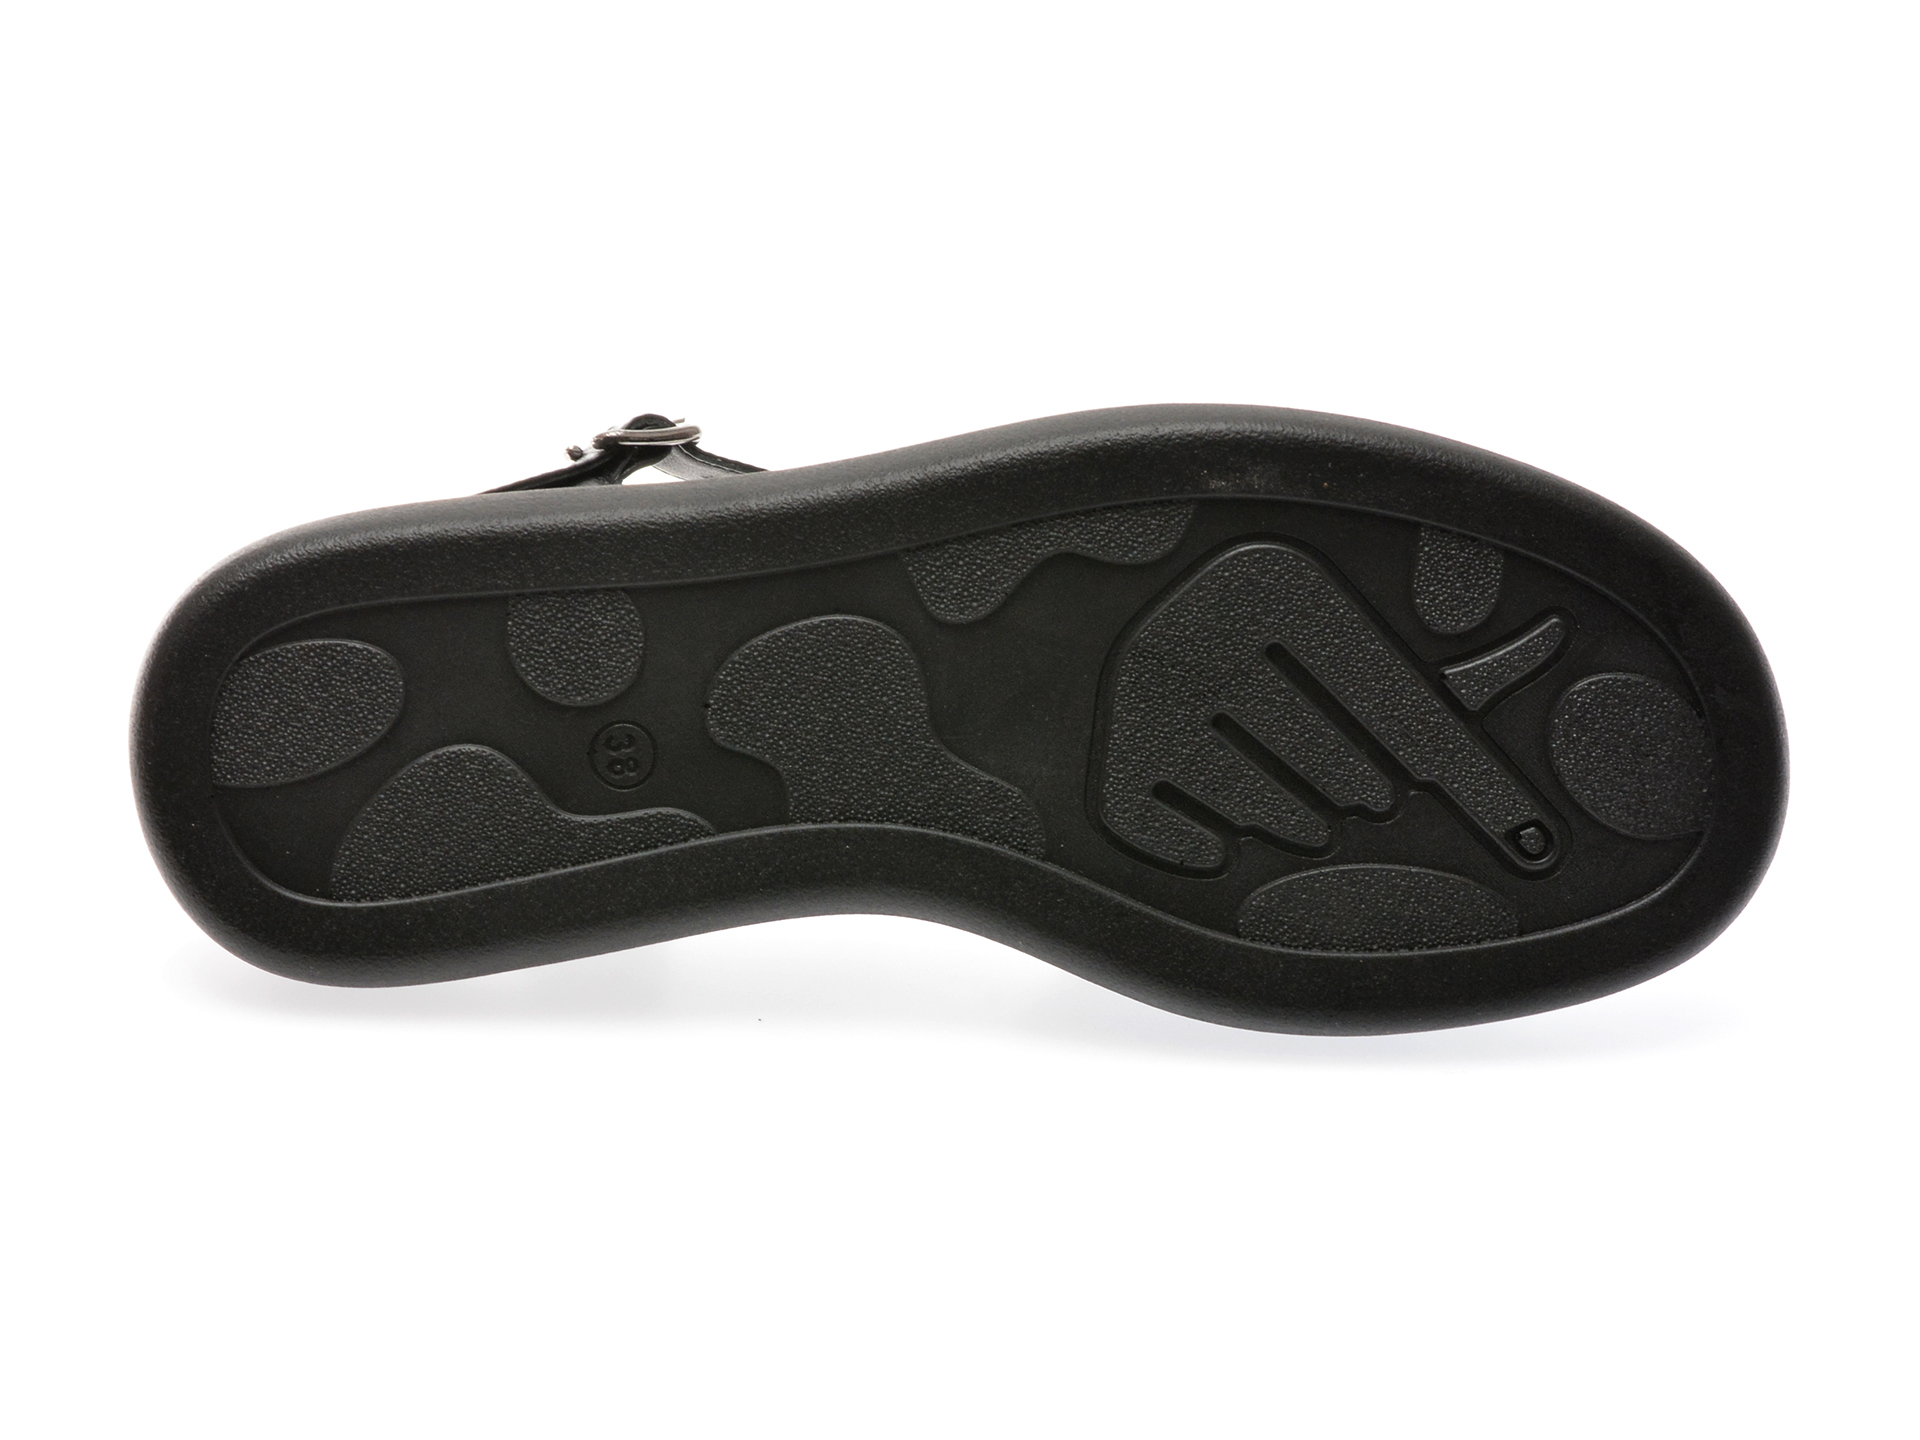 Sandale casual GRYXX gri, 2281654, din piele naturala